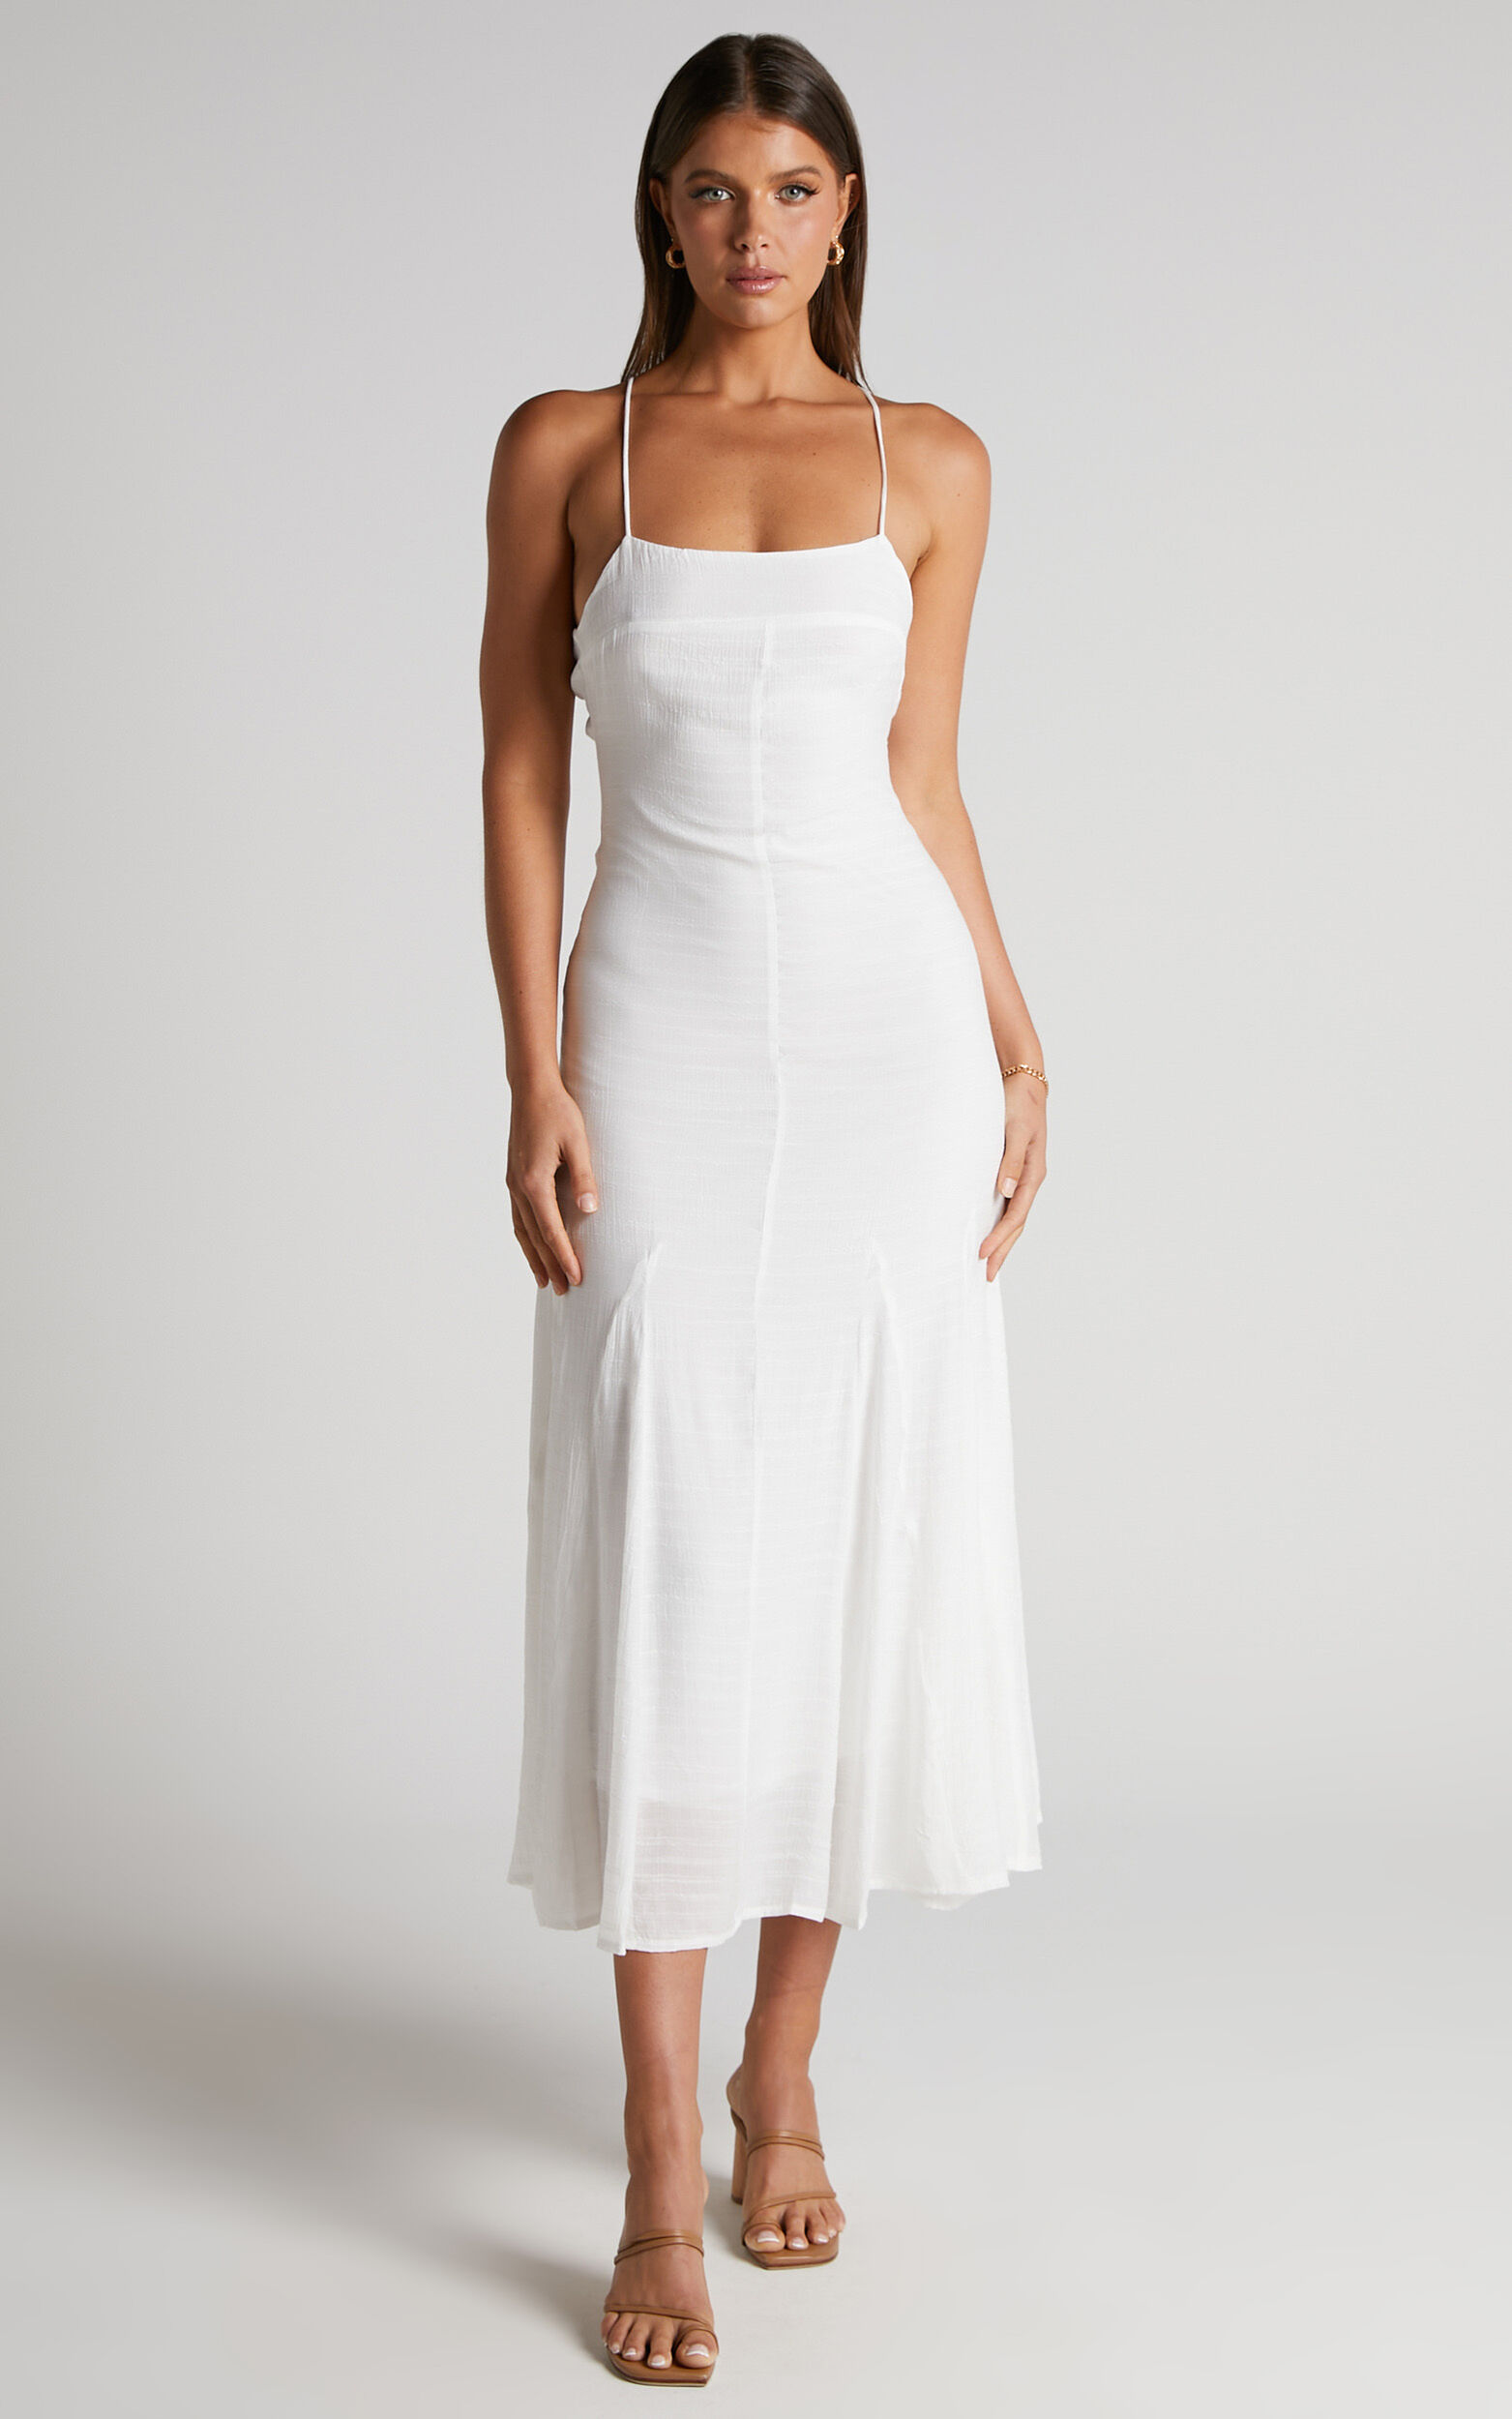 Romarie Midi Dress - Tie Back Slip Dress in White - 06, WHT1